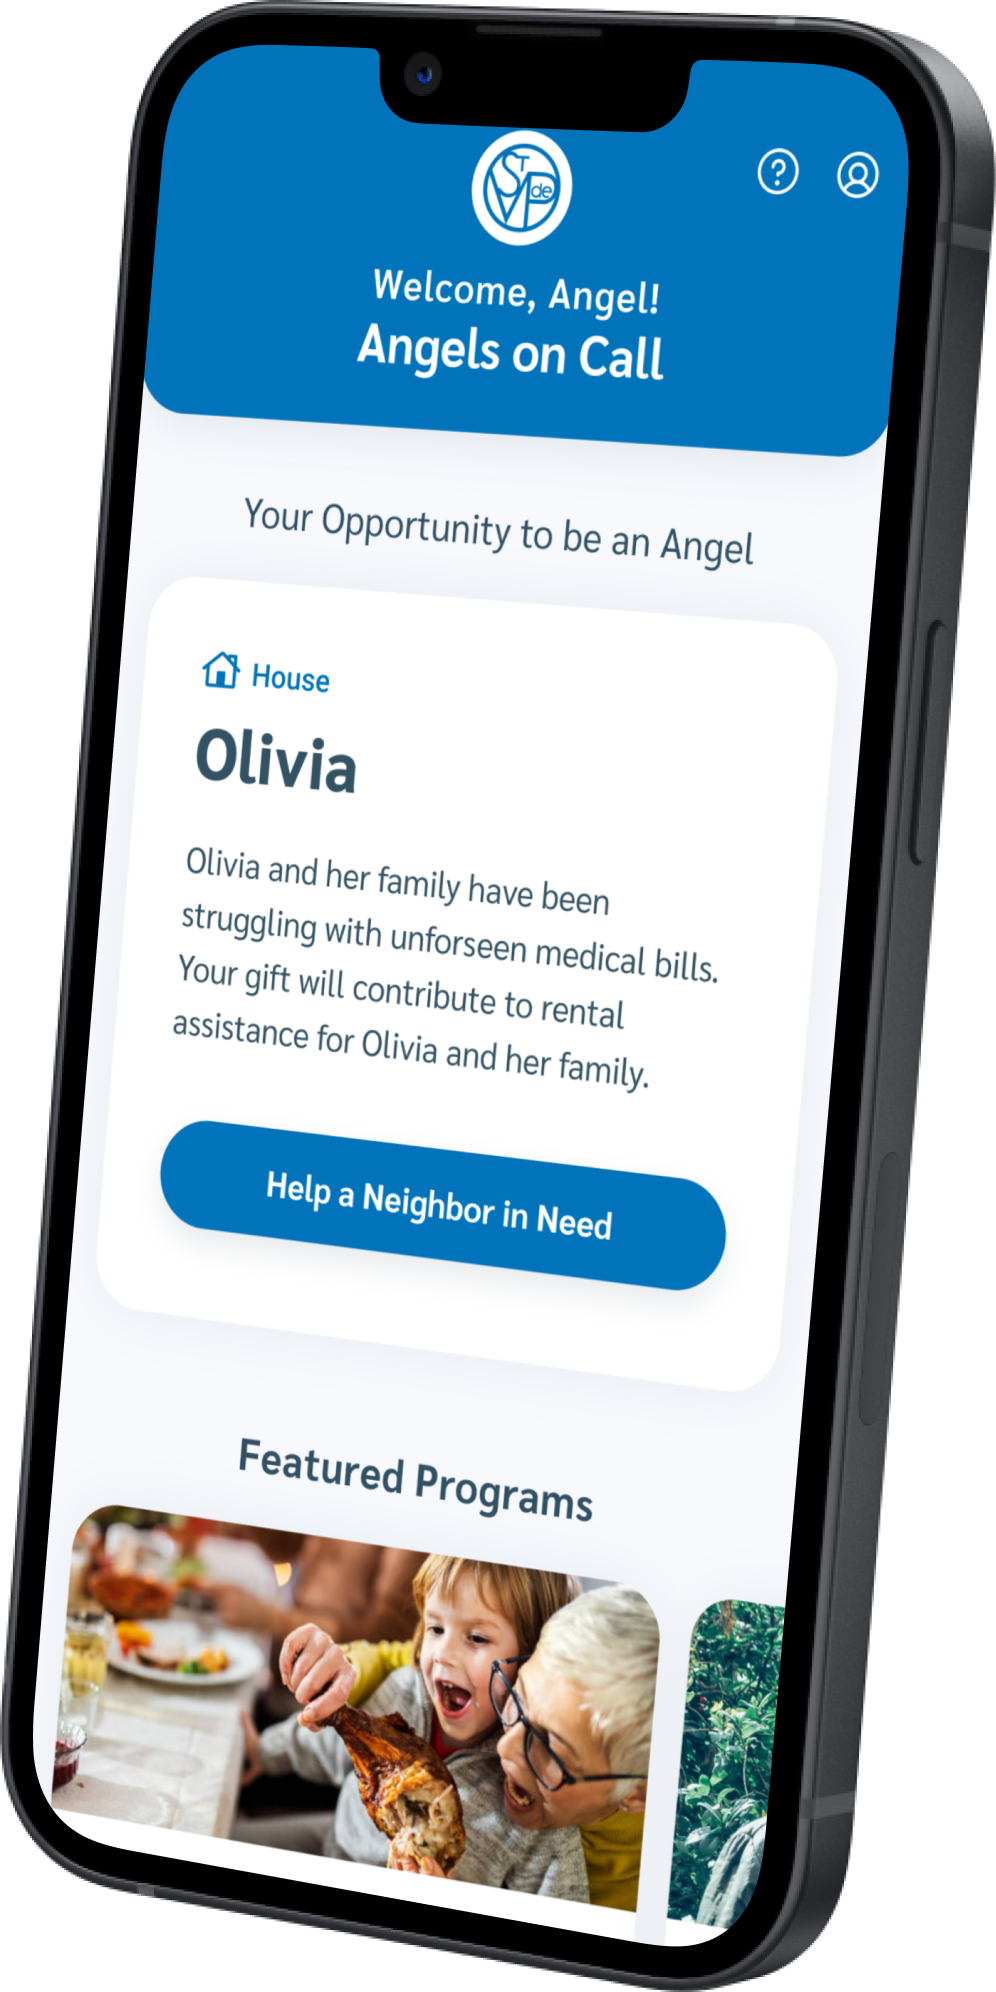 App screen with Oliviya's need